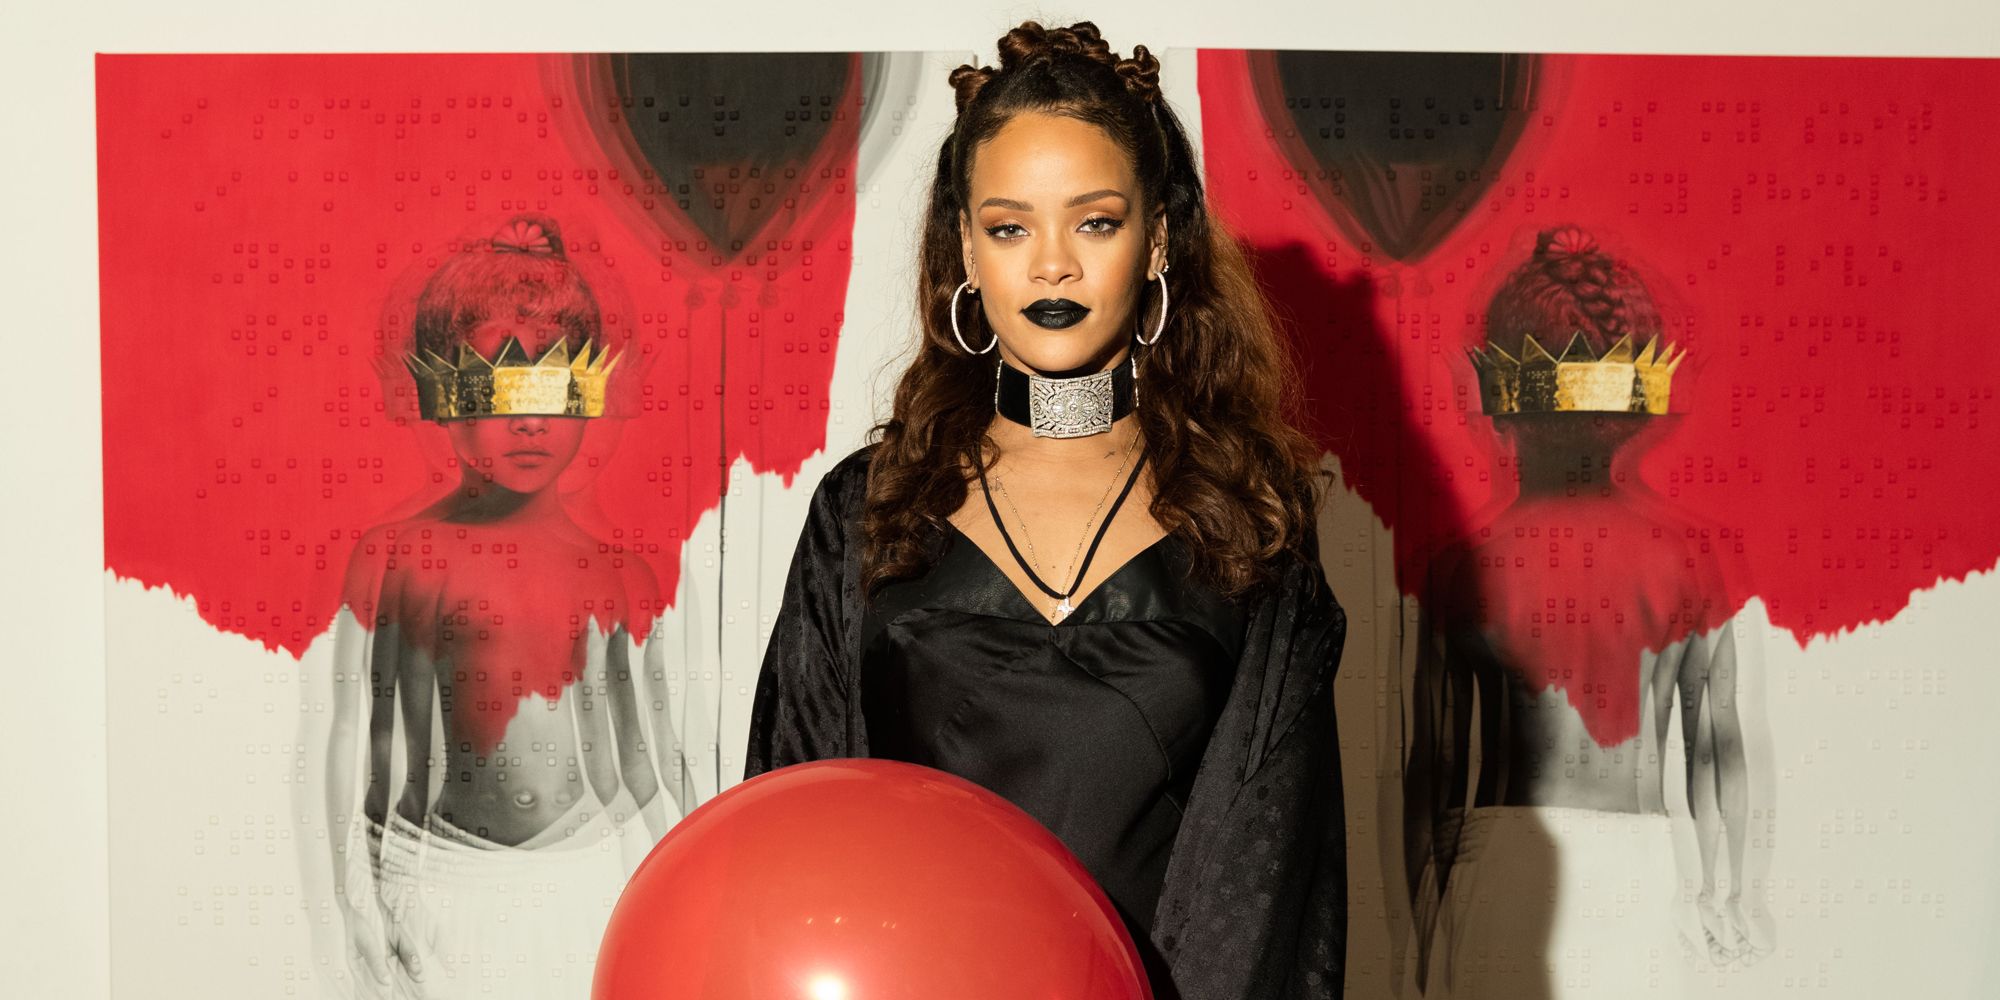 Rihanna’s “Anti” album returns to charts before Superbowl performance